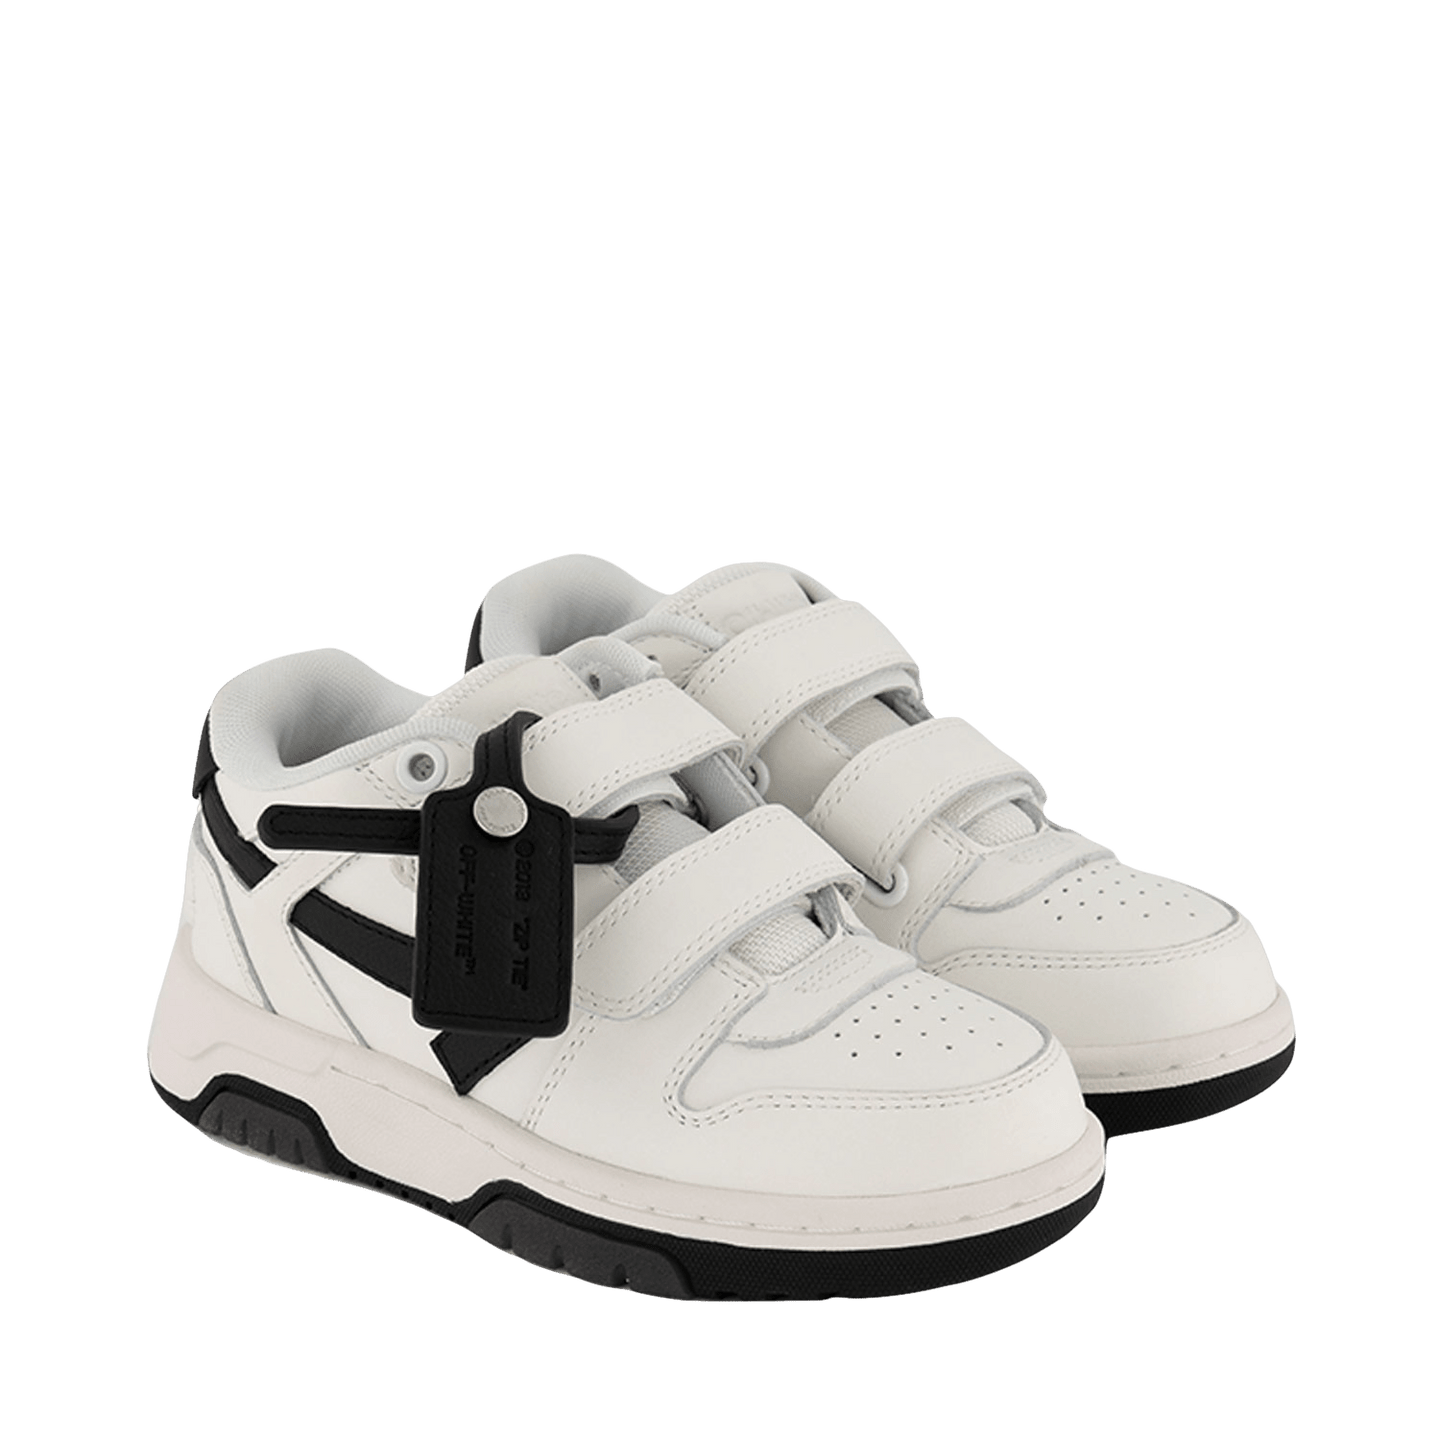 Off-White Kinder Jongens Sneakers Wit 24